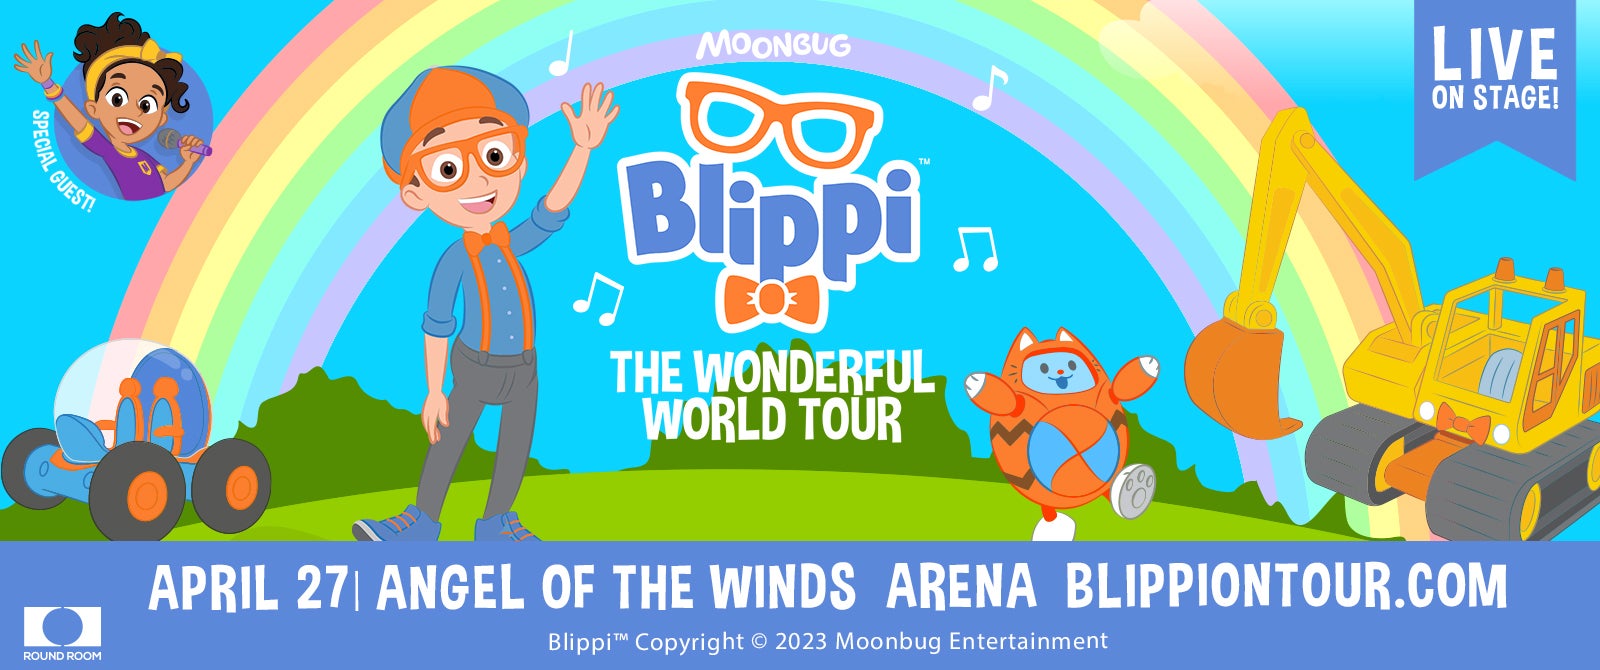 Blippi The Wonderful World Tour Angel of the Winds Arena